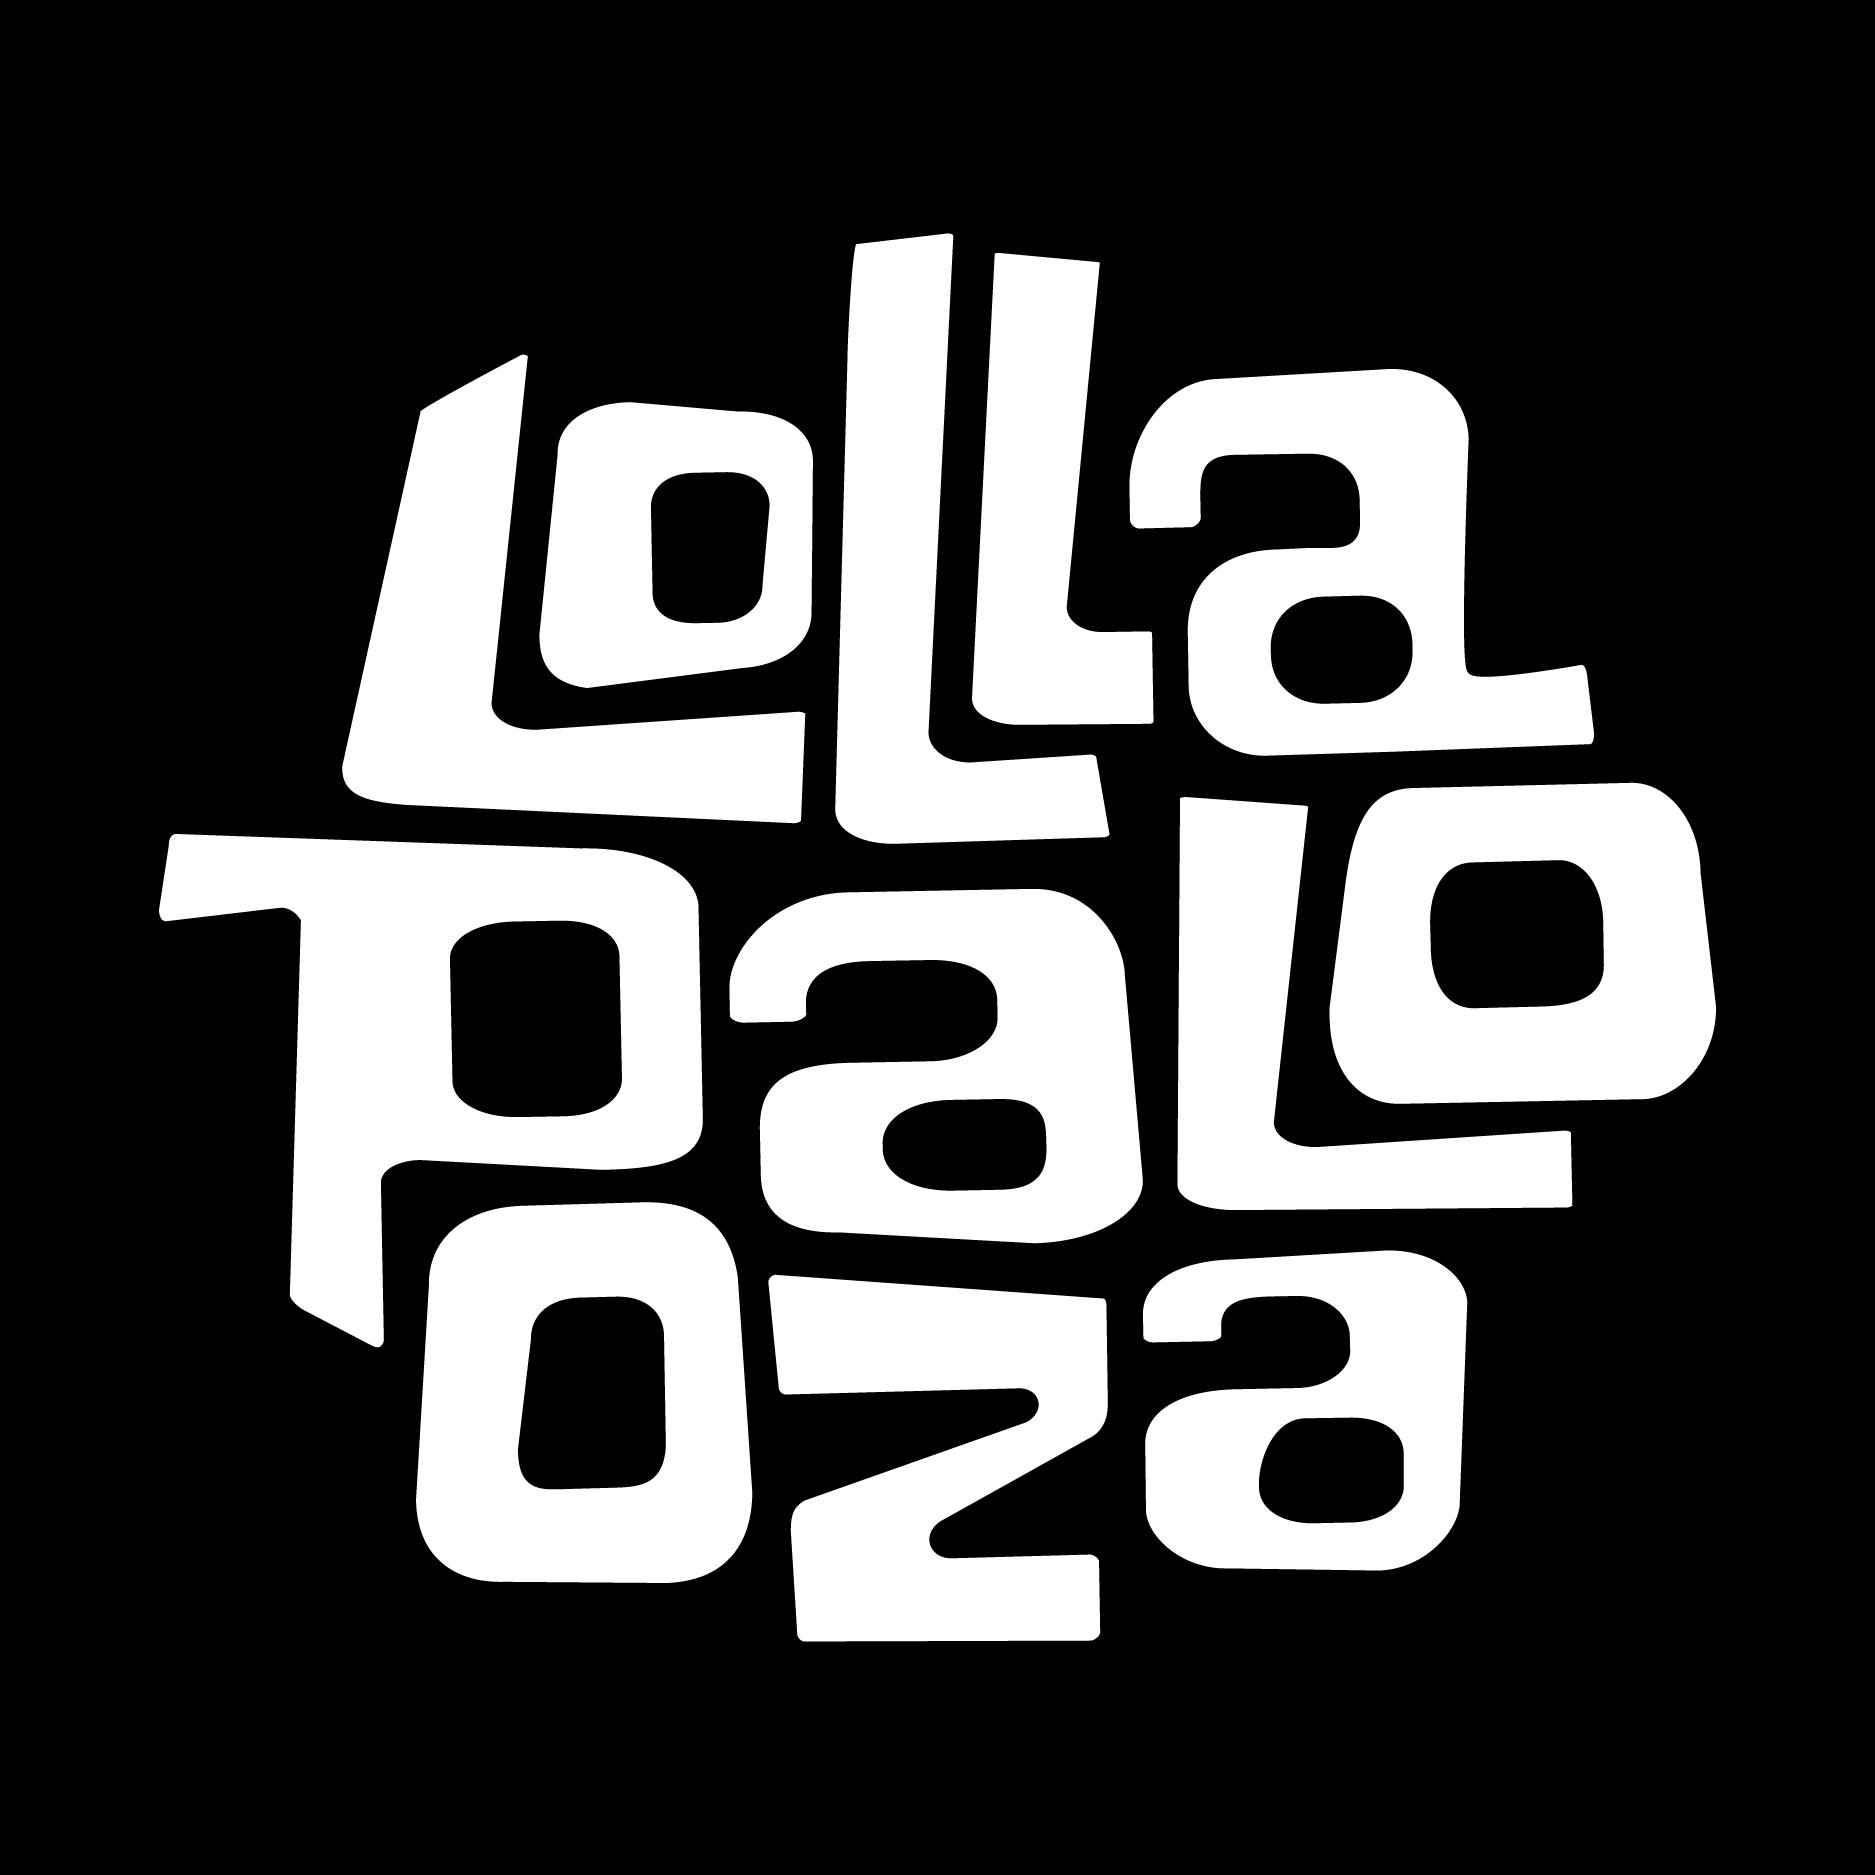 logo Lollapalooza